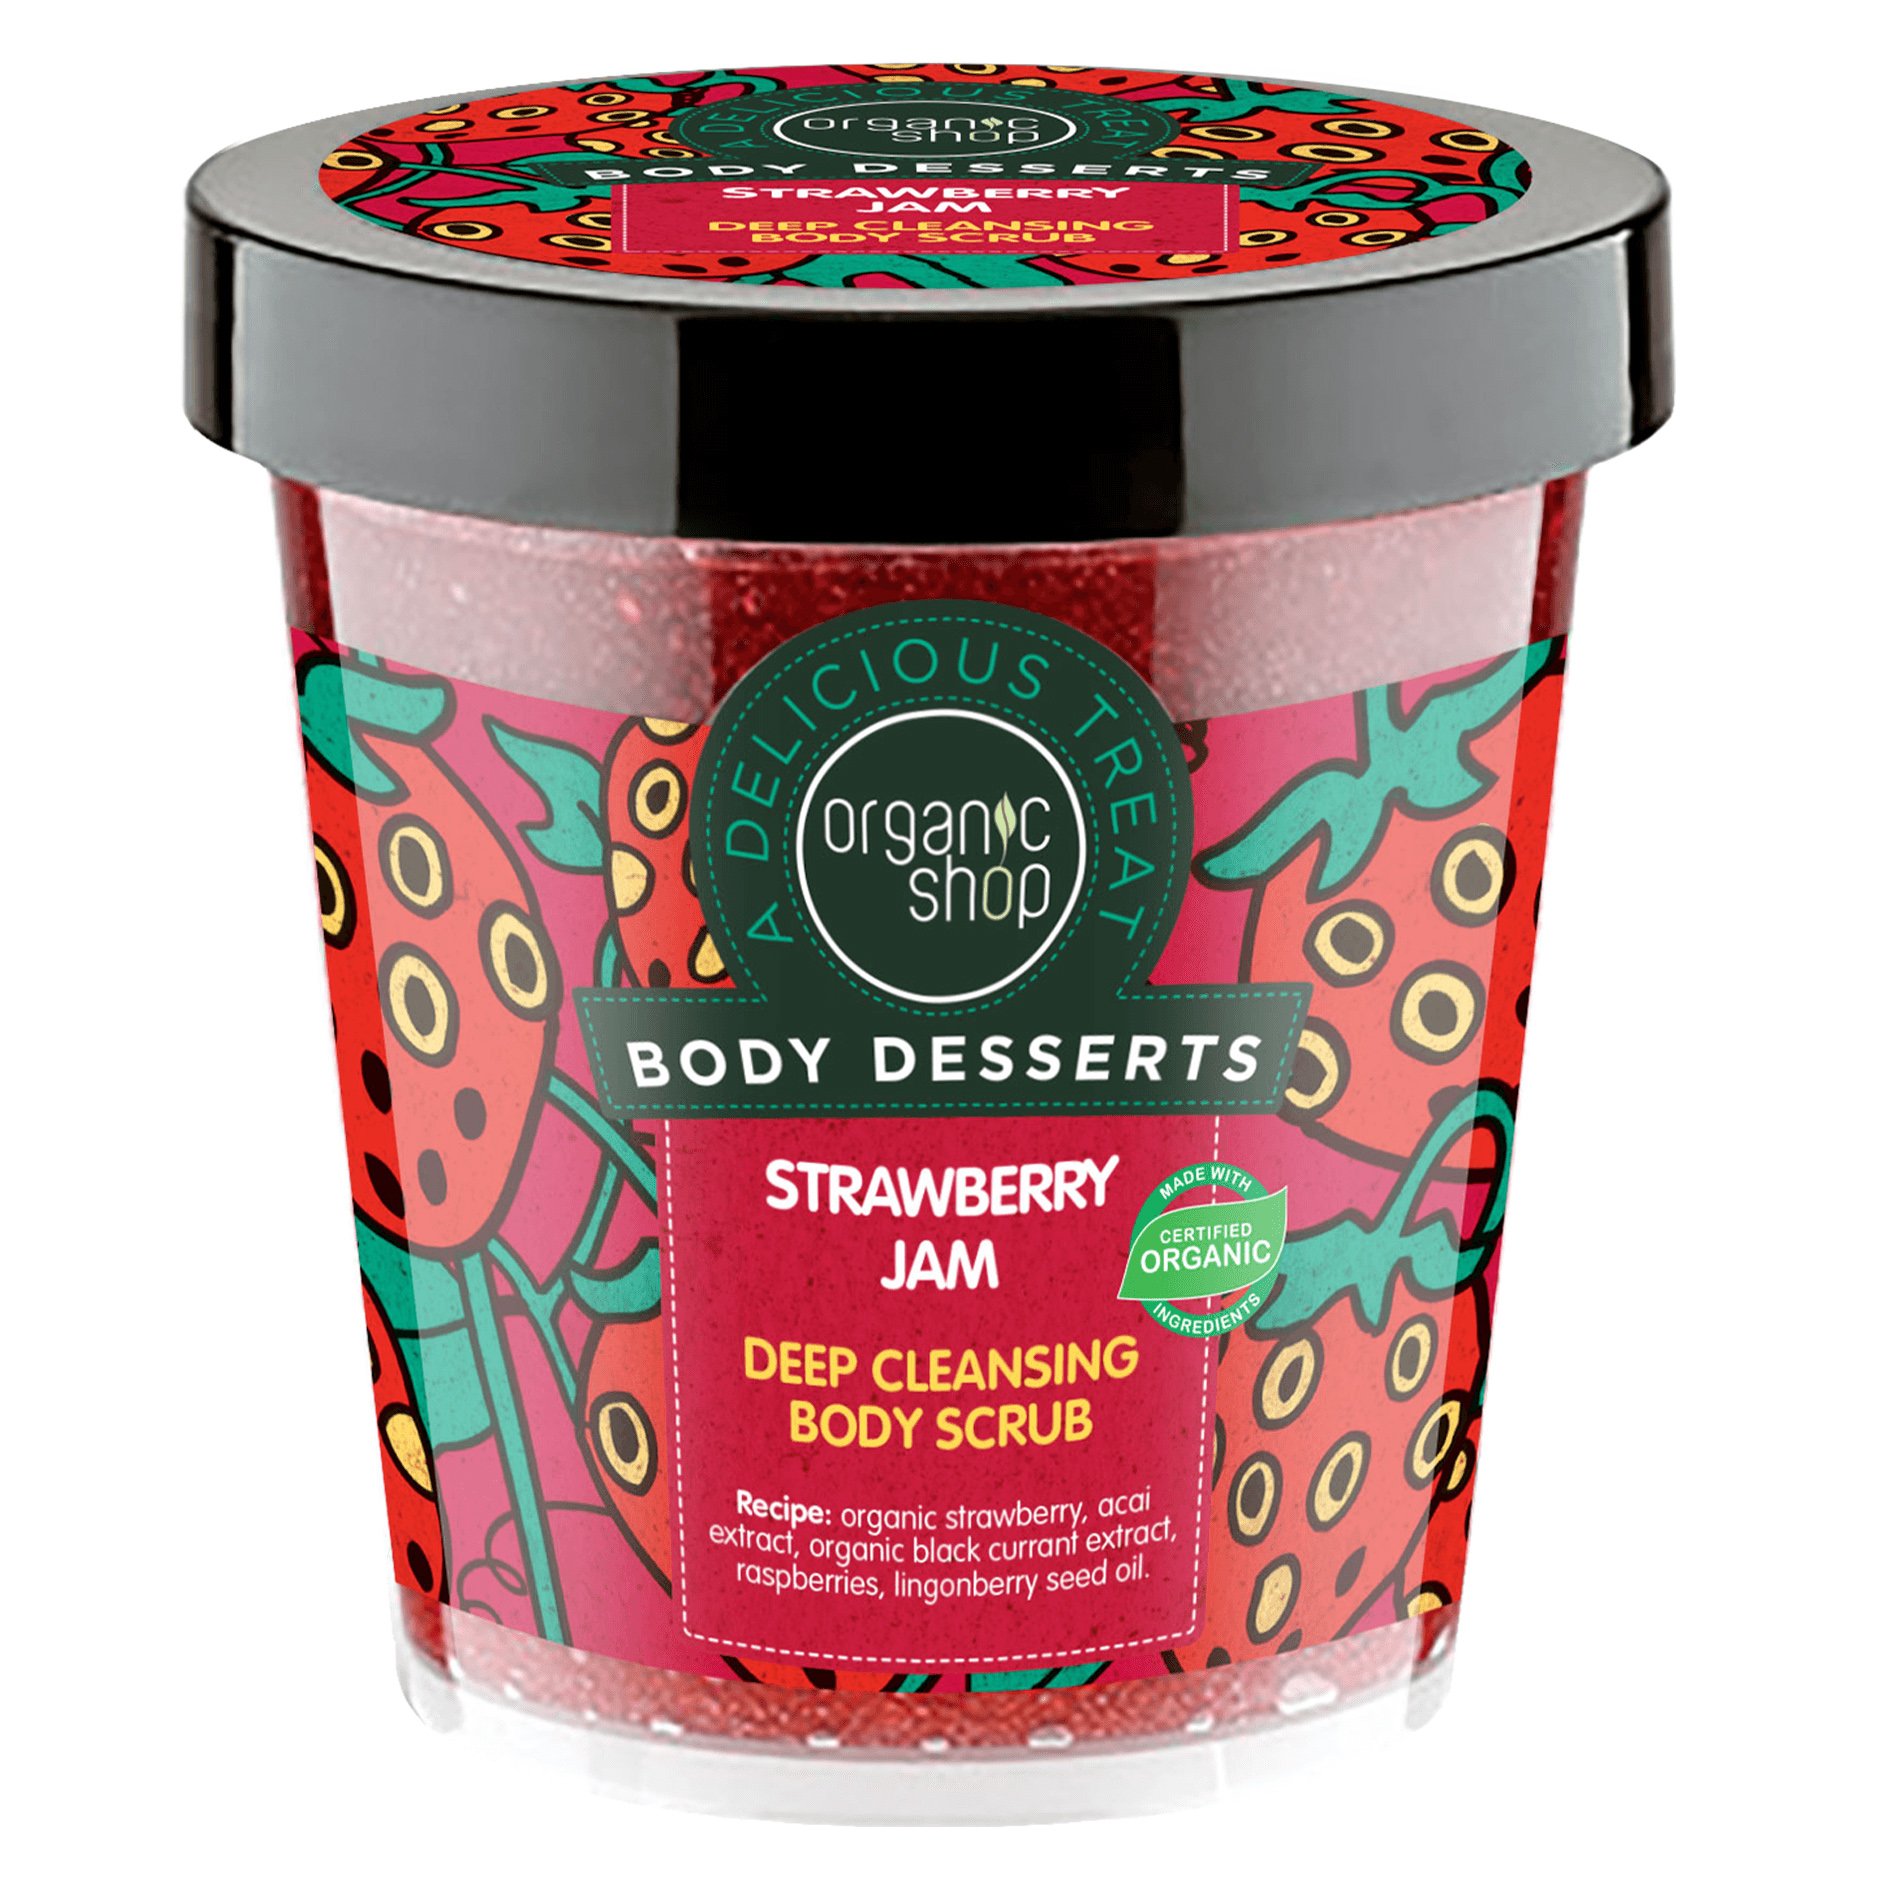 Organic Shop Body Desserts Strawberry Jam Deep Cleansing Body Scrub Απολεπιστικό Σώματος για Βαθύ Καθαρισμό με Άρωμα Μαρμελάδα Φράουλα 450ml